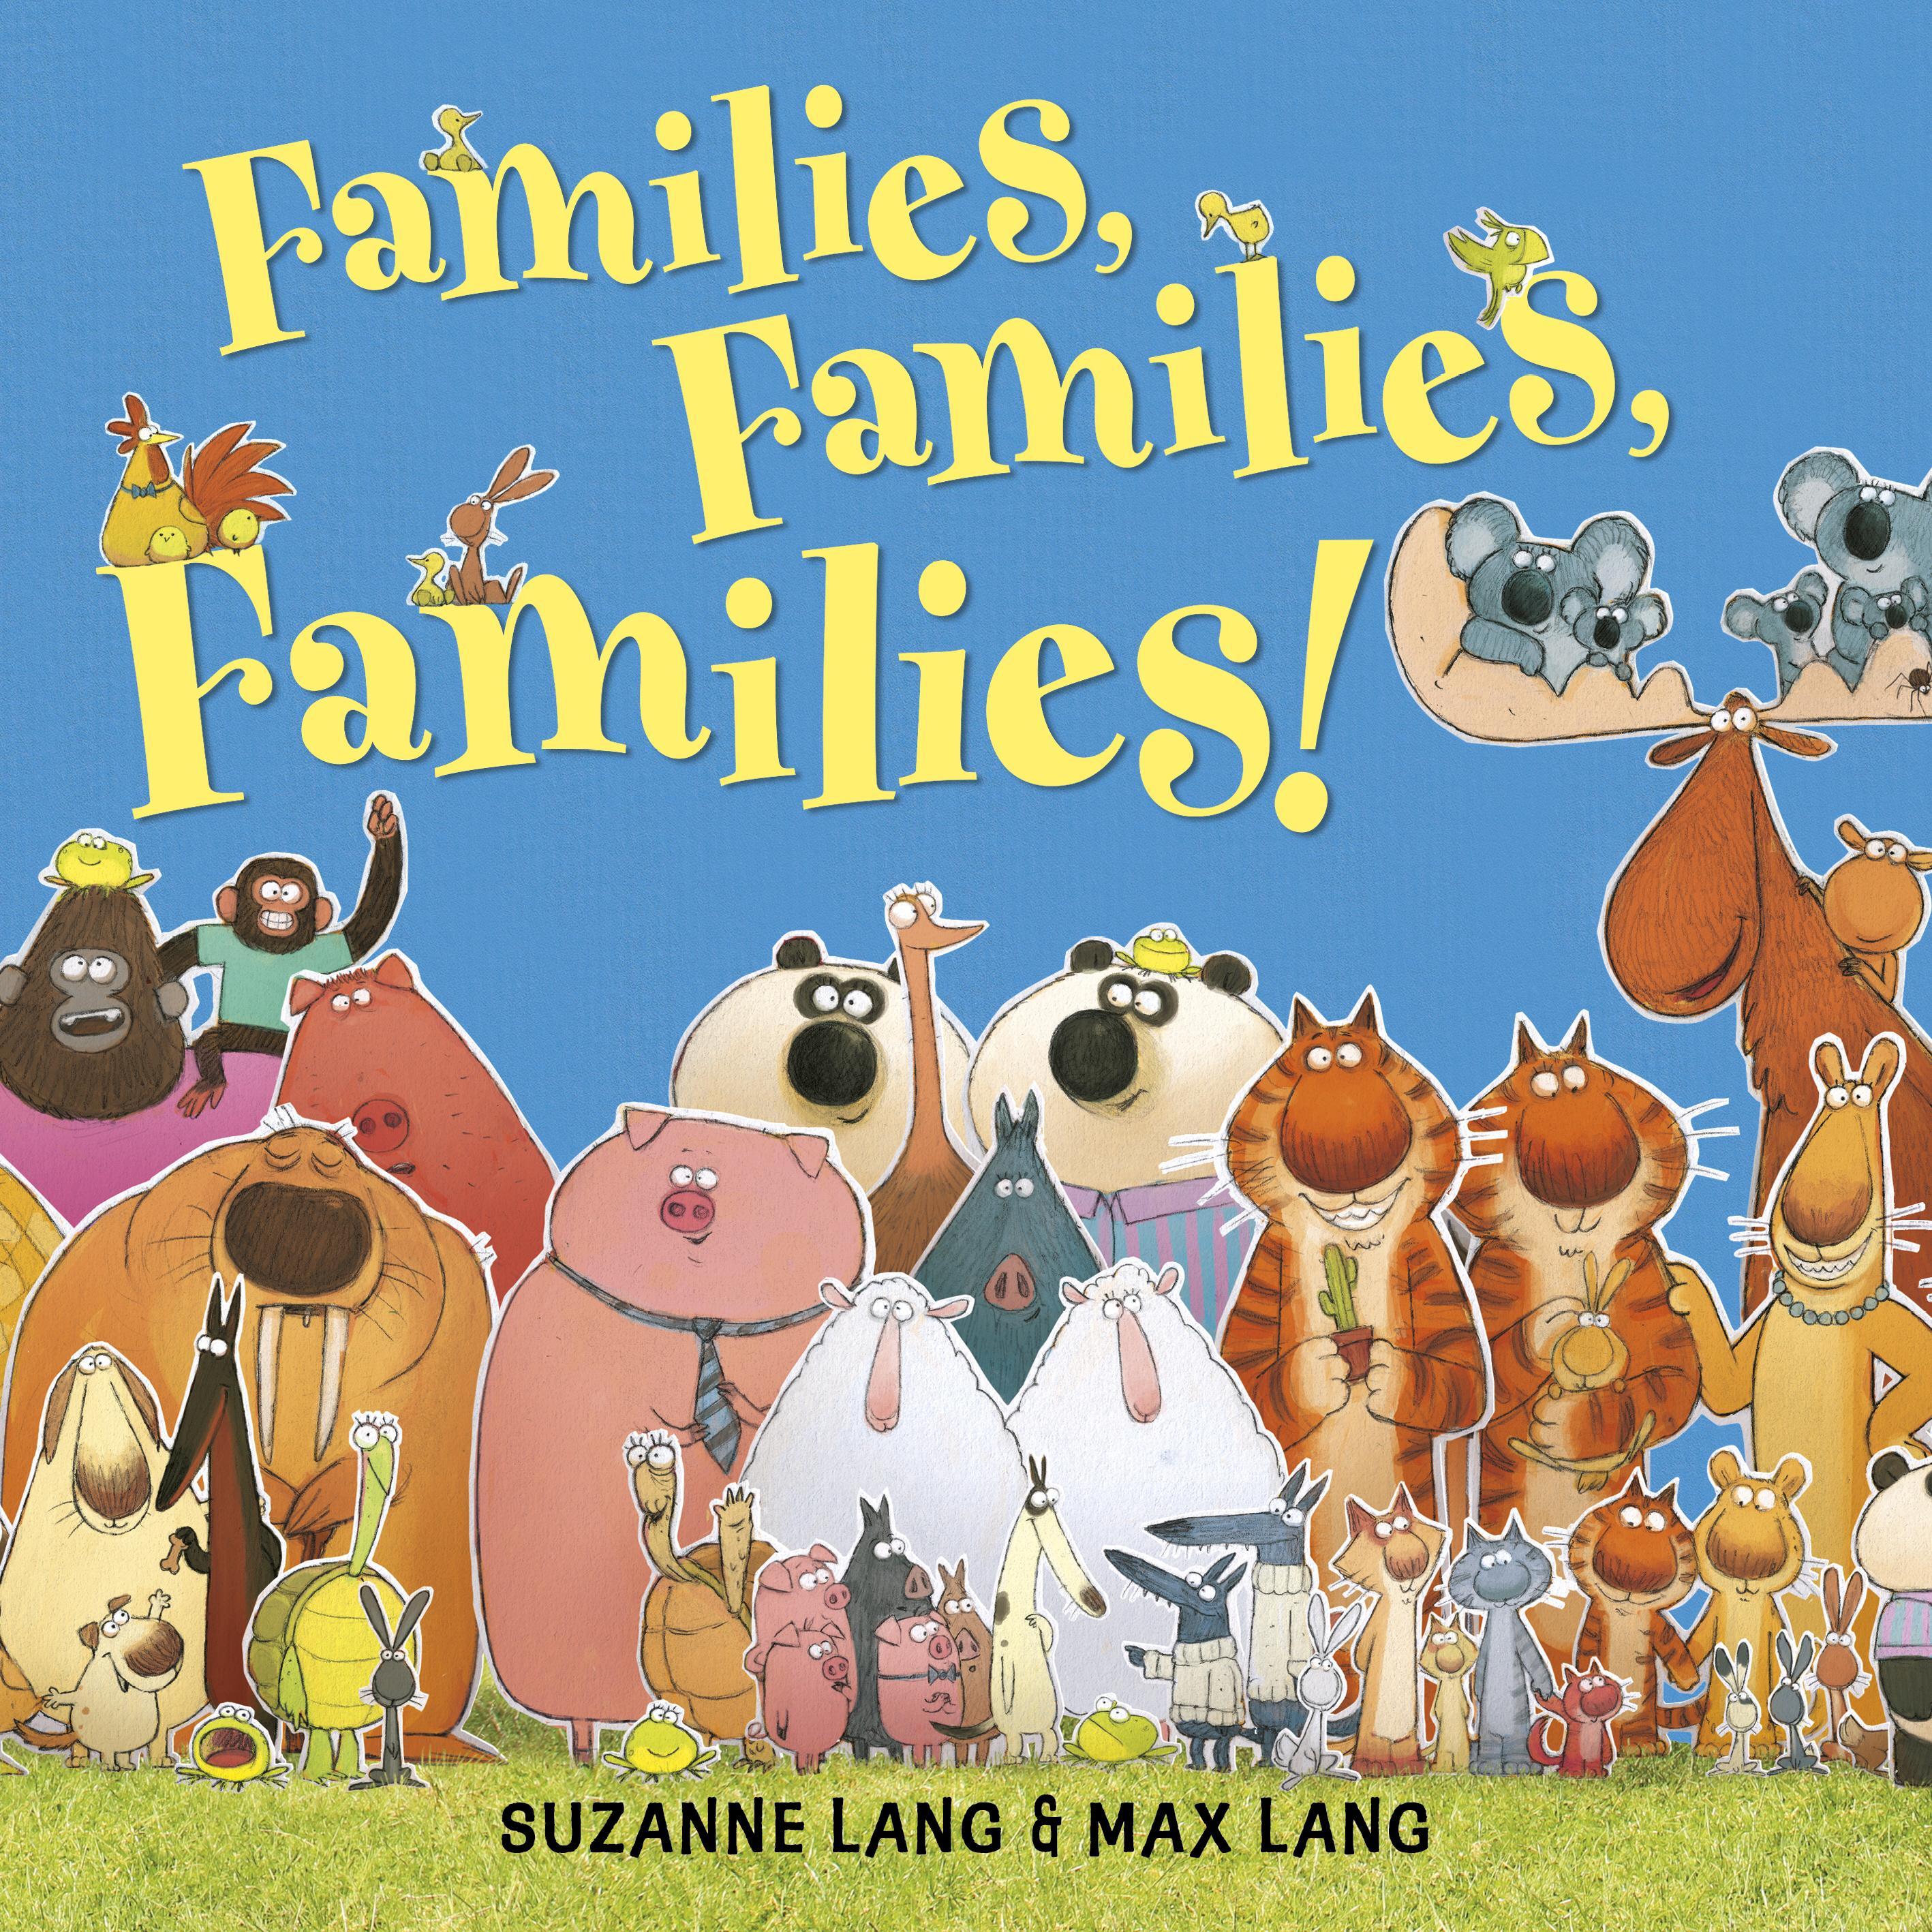 Families Families Families - Suzanne Lang